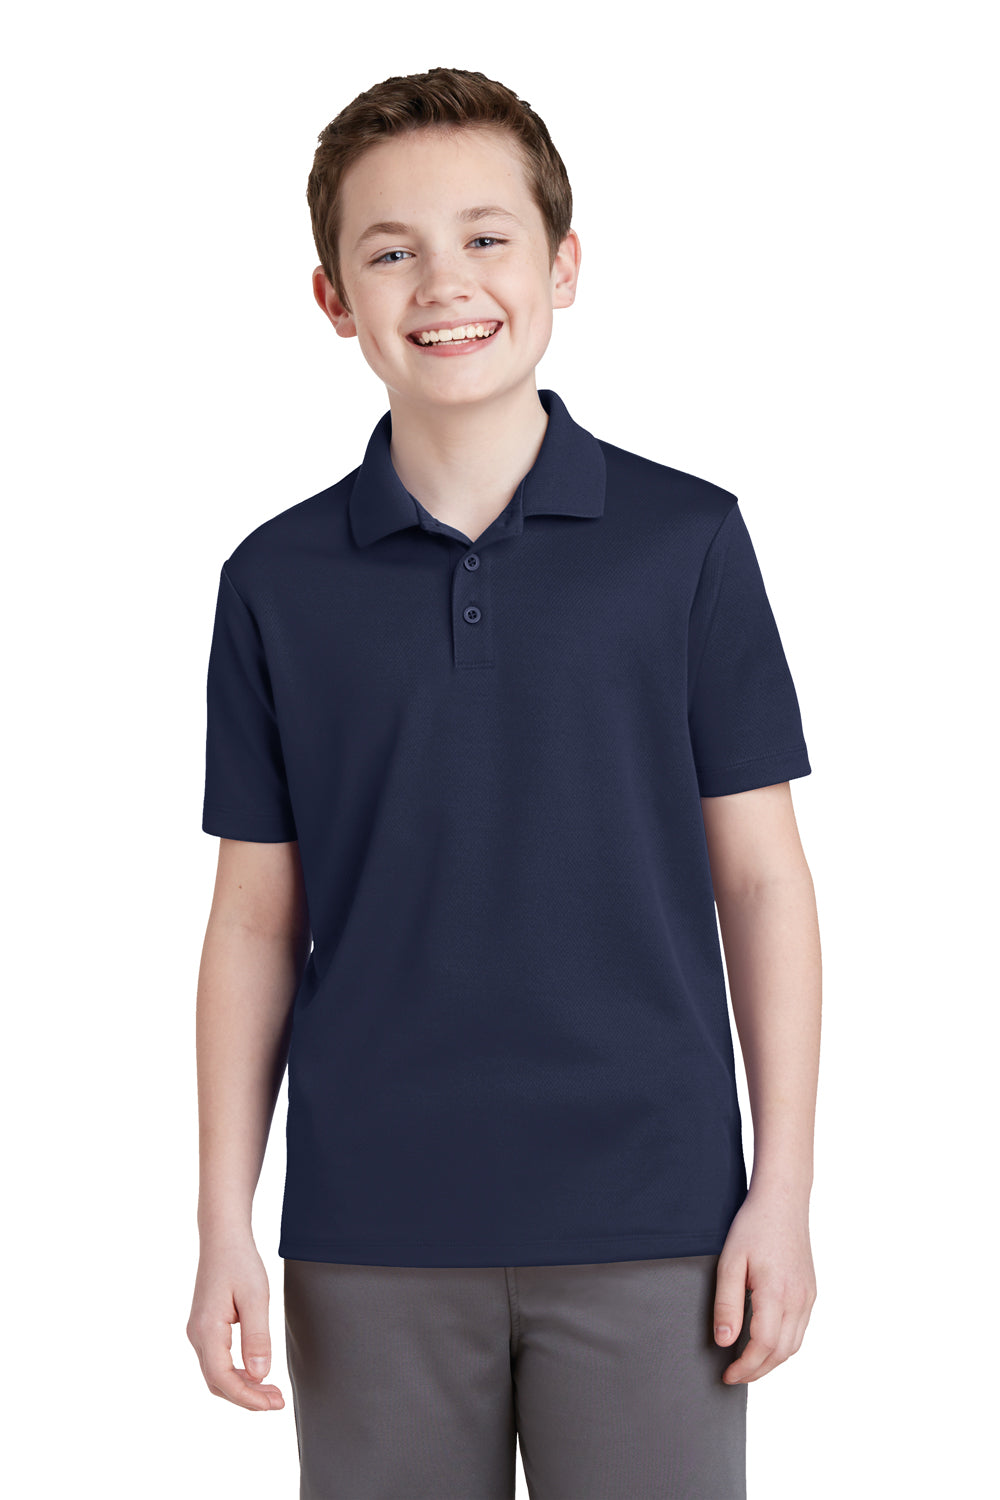 Youth Polo Shirts-Short Sleeve